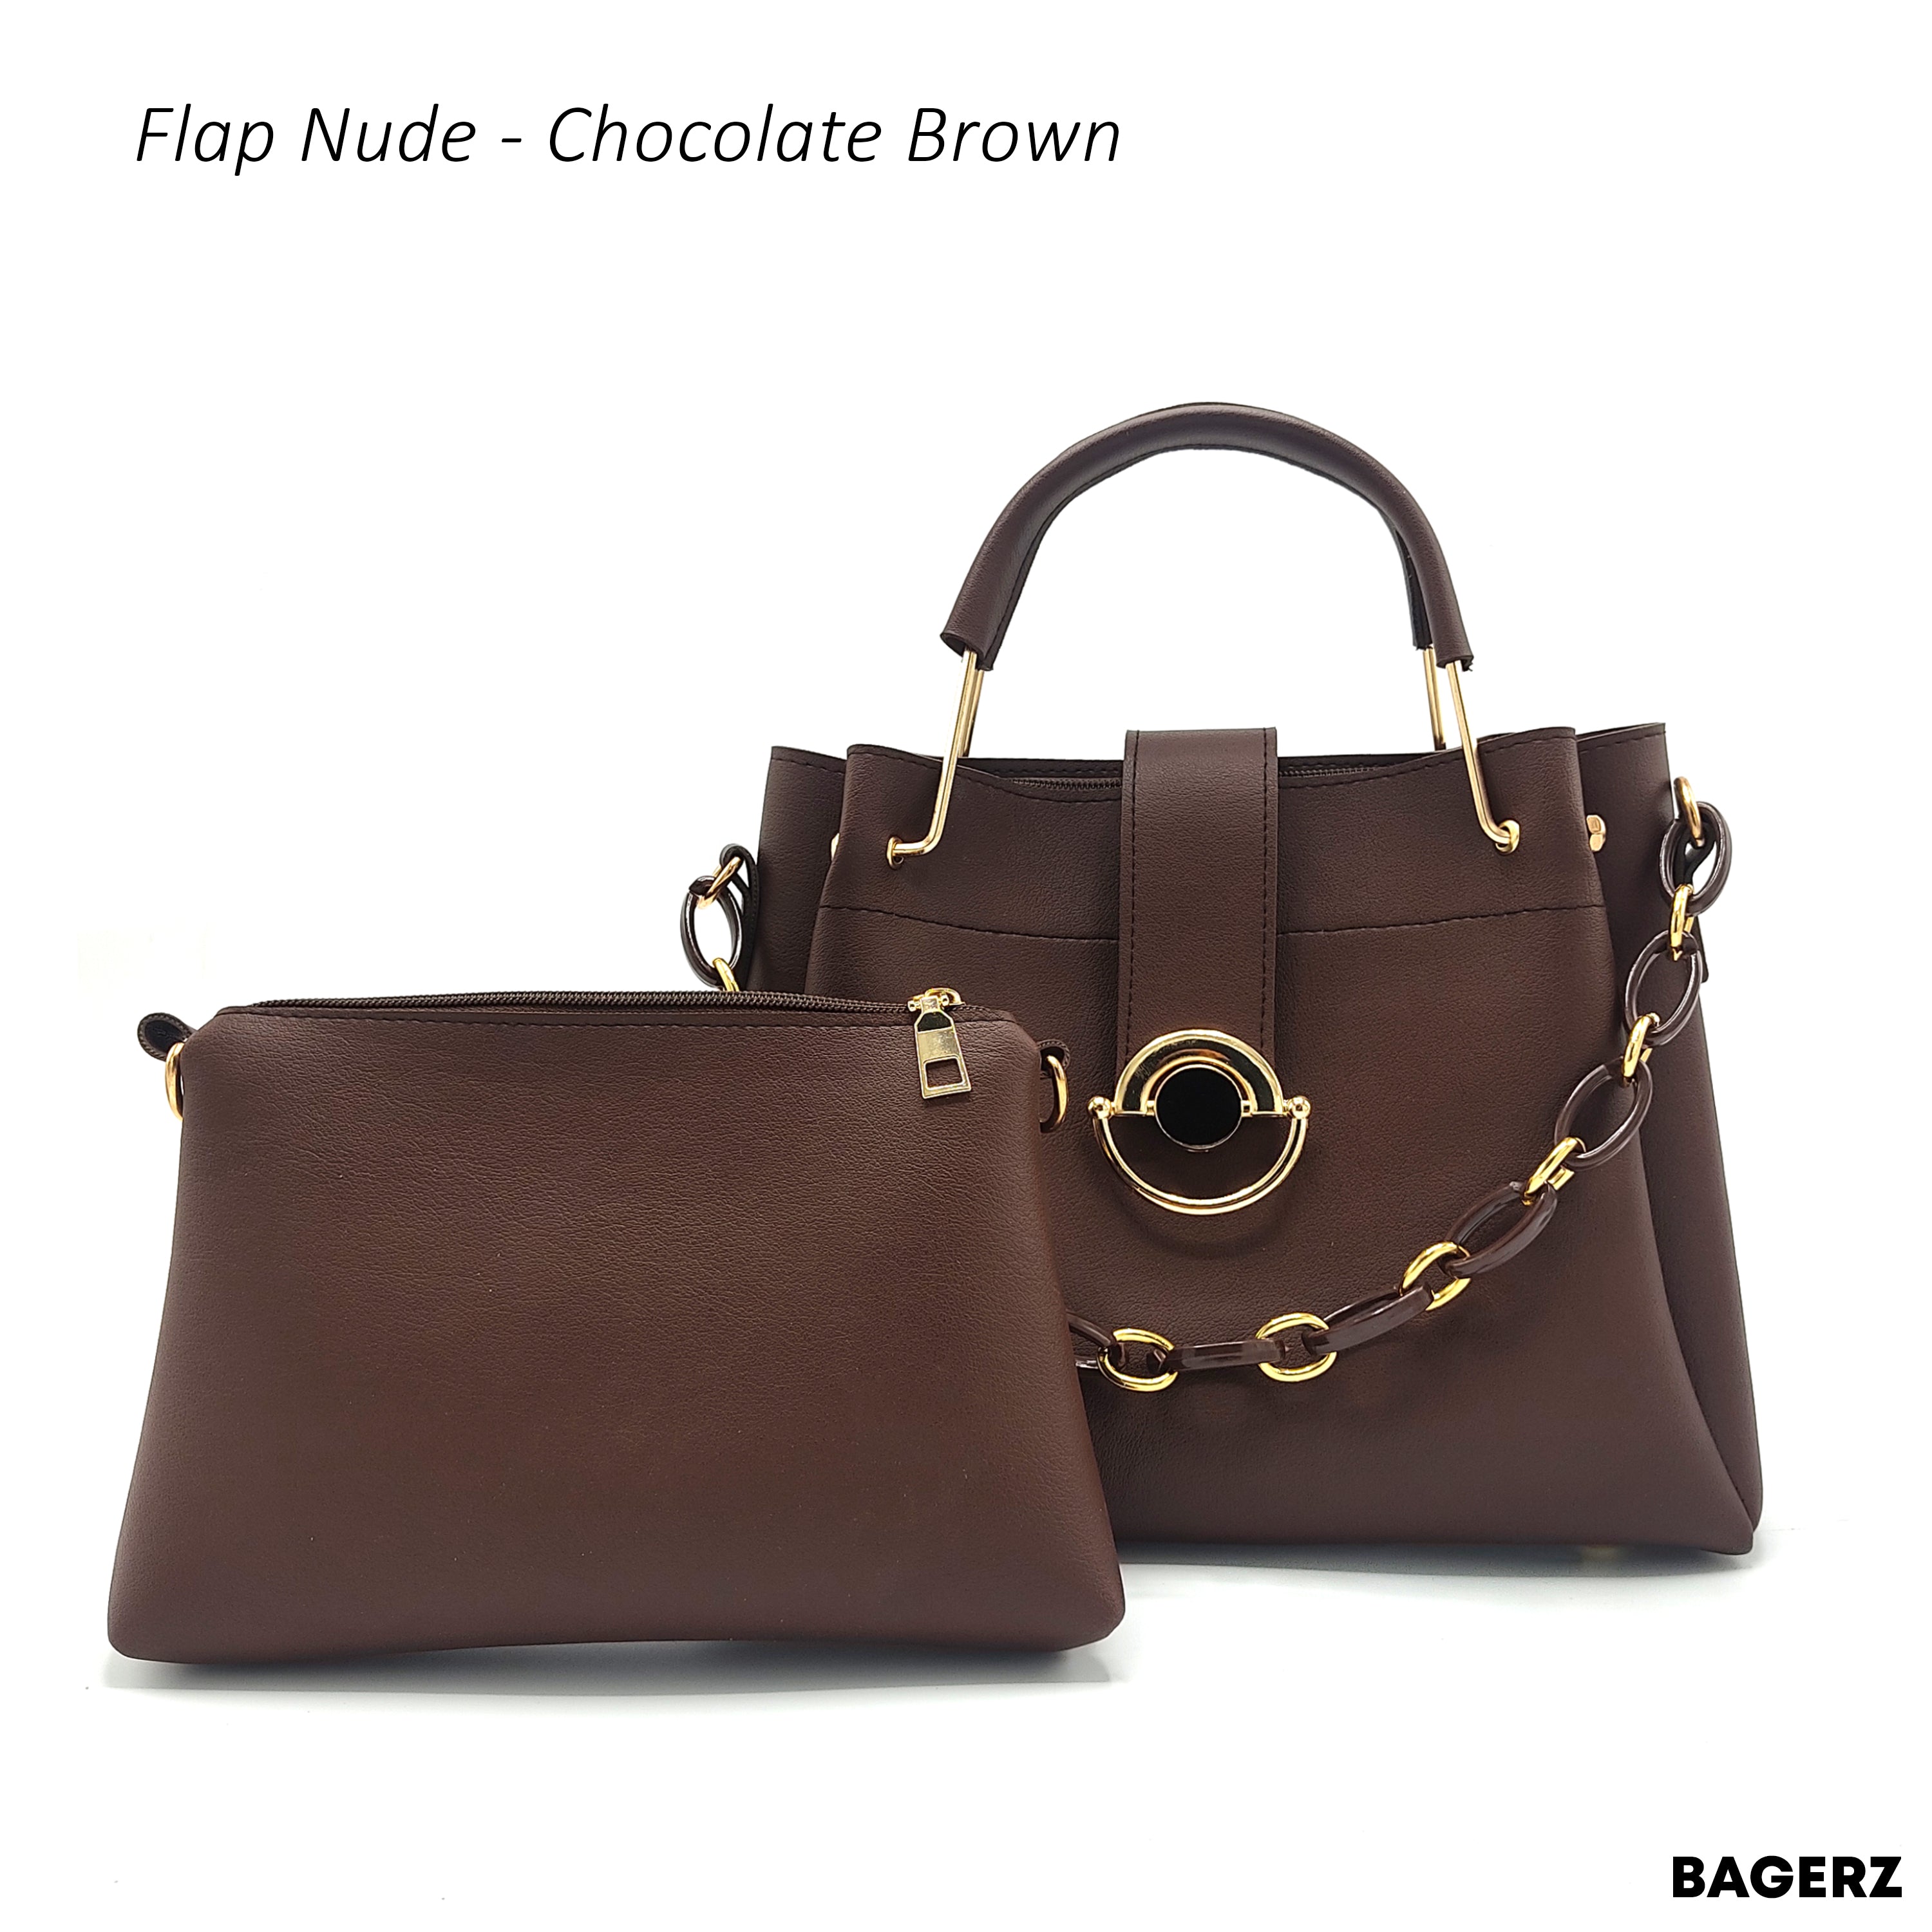 Flap Nude - Chocolate Brown